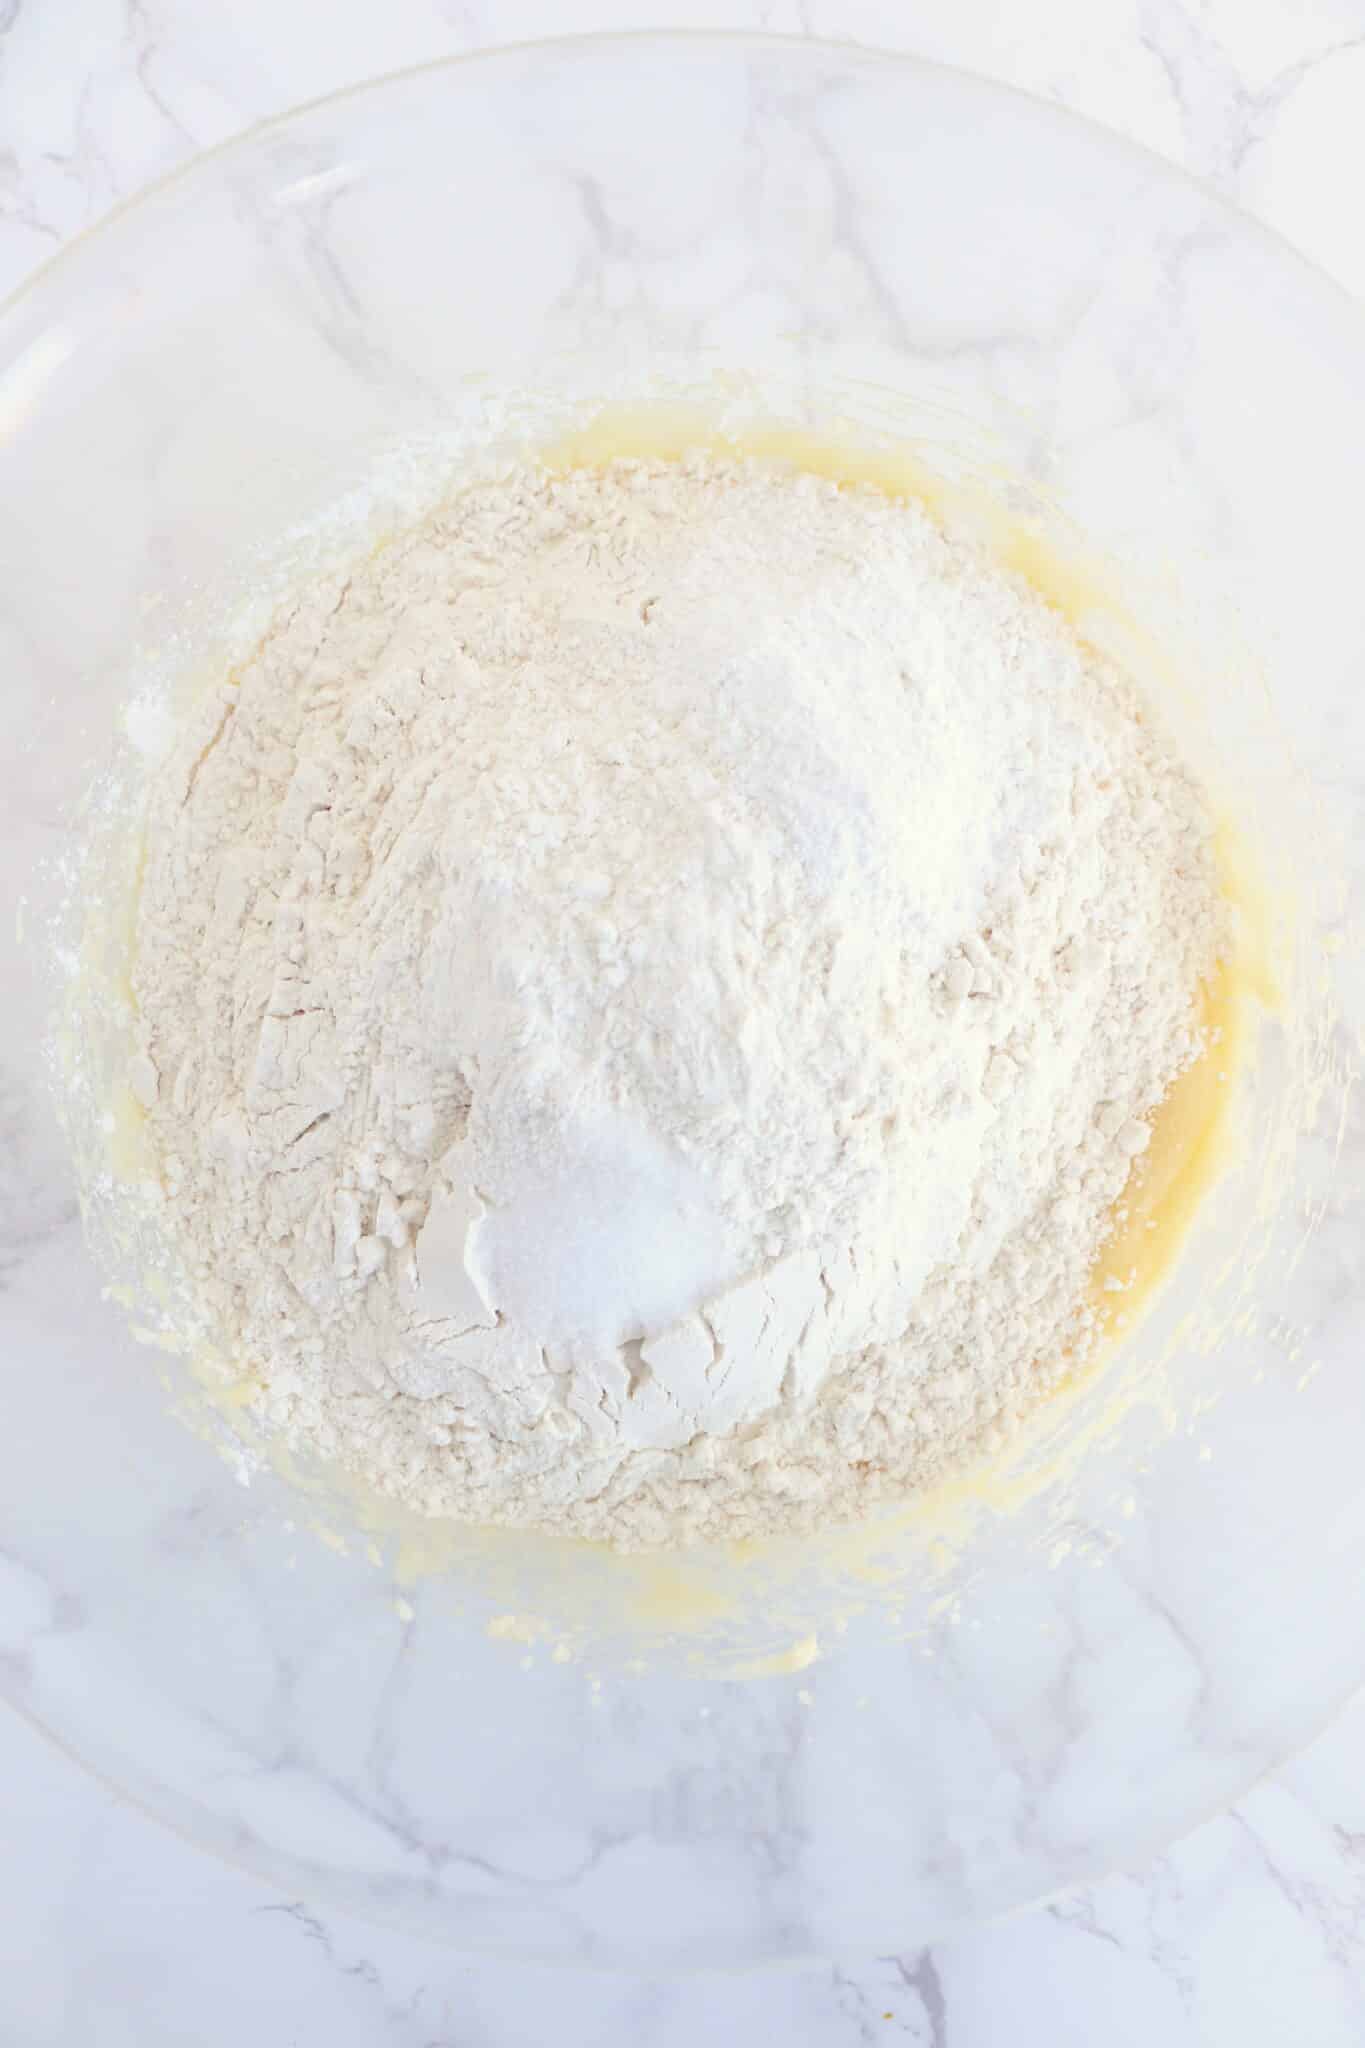 Mixing the flour.